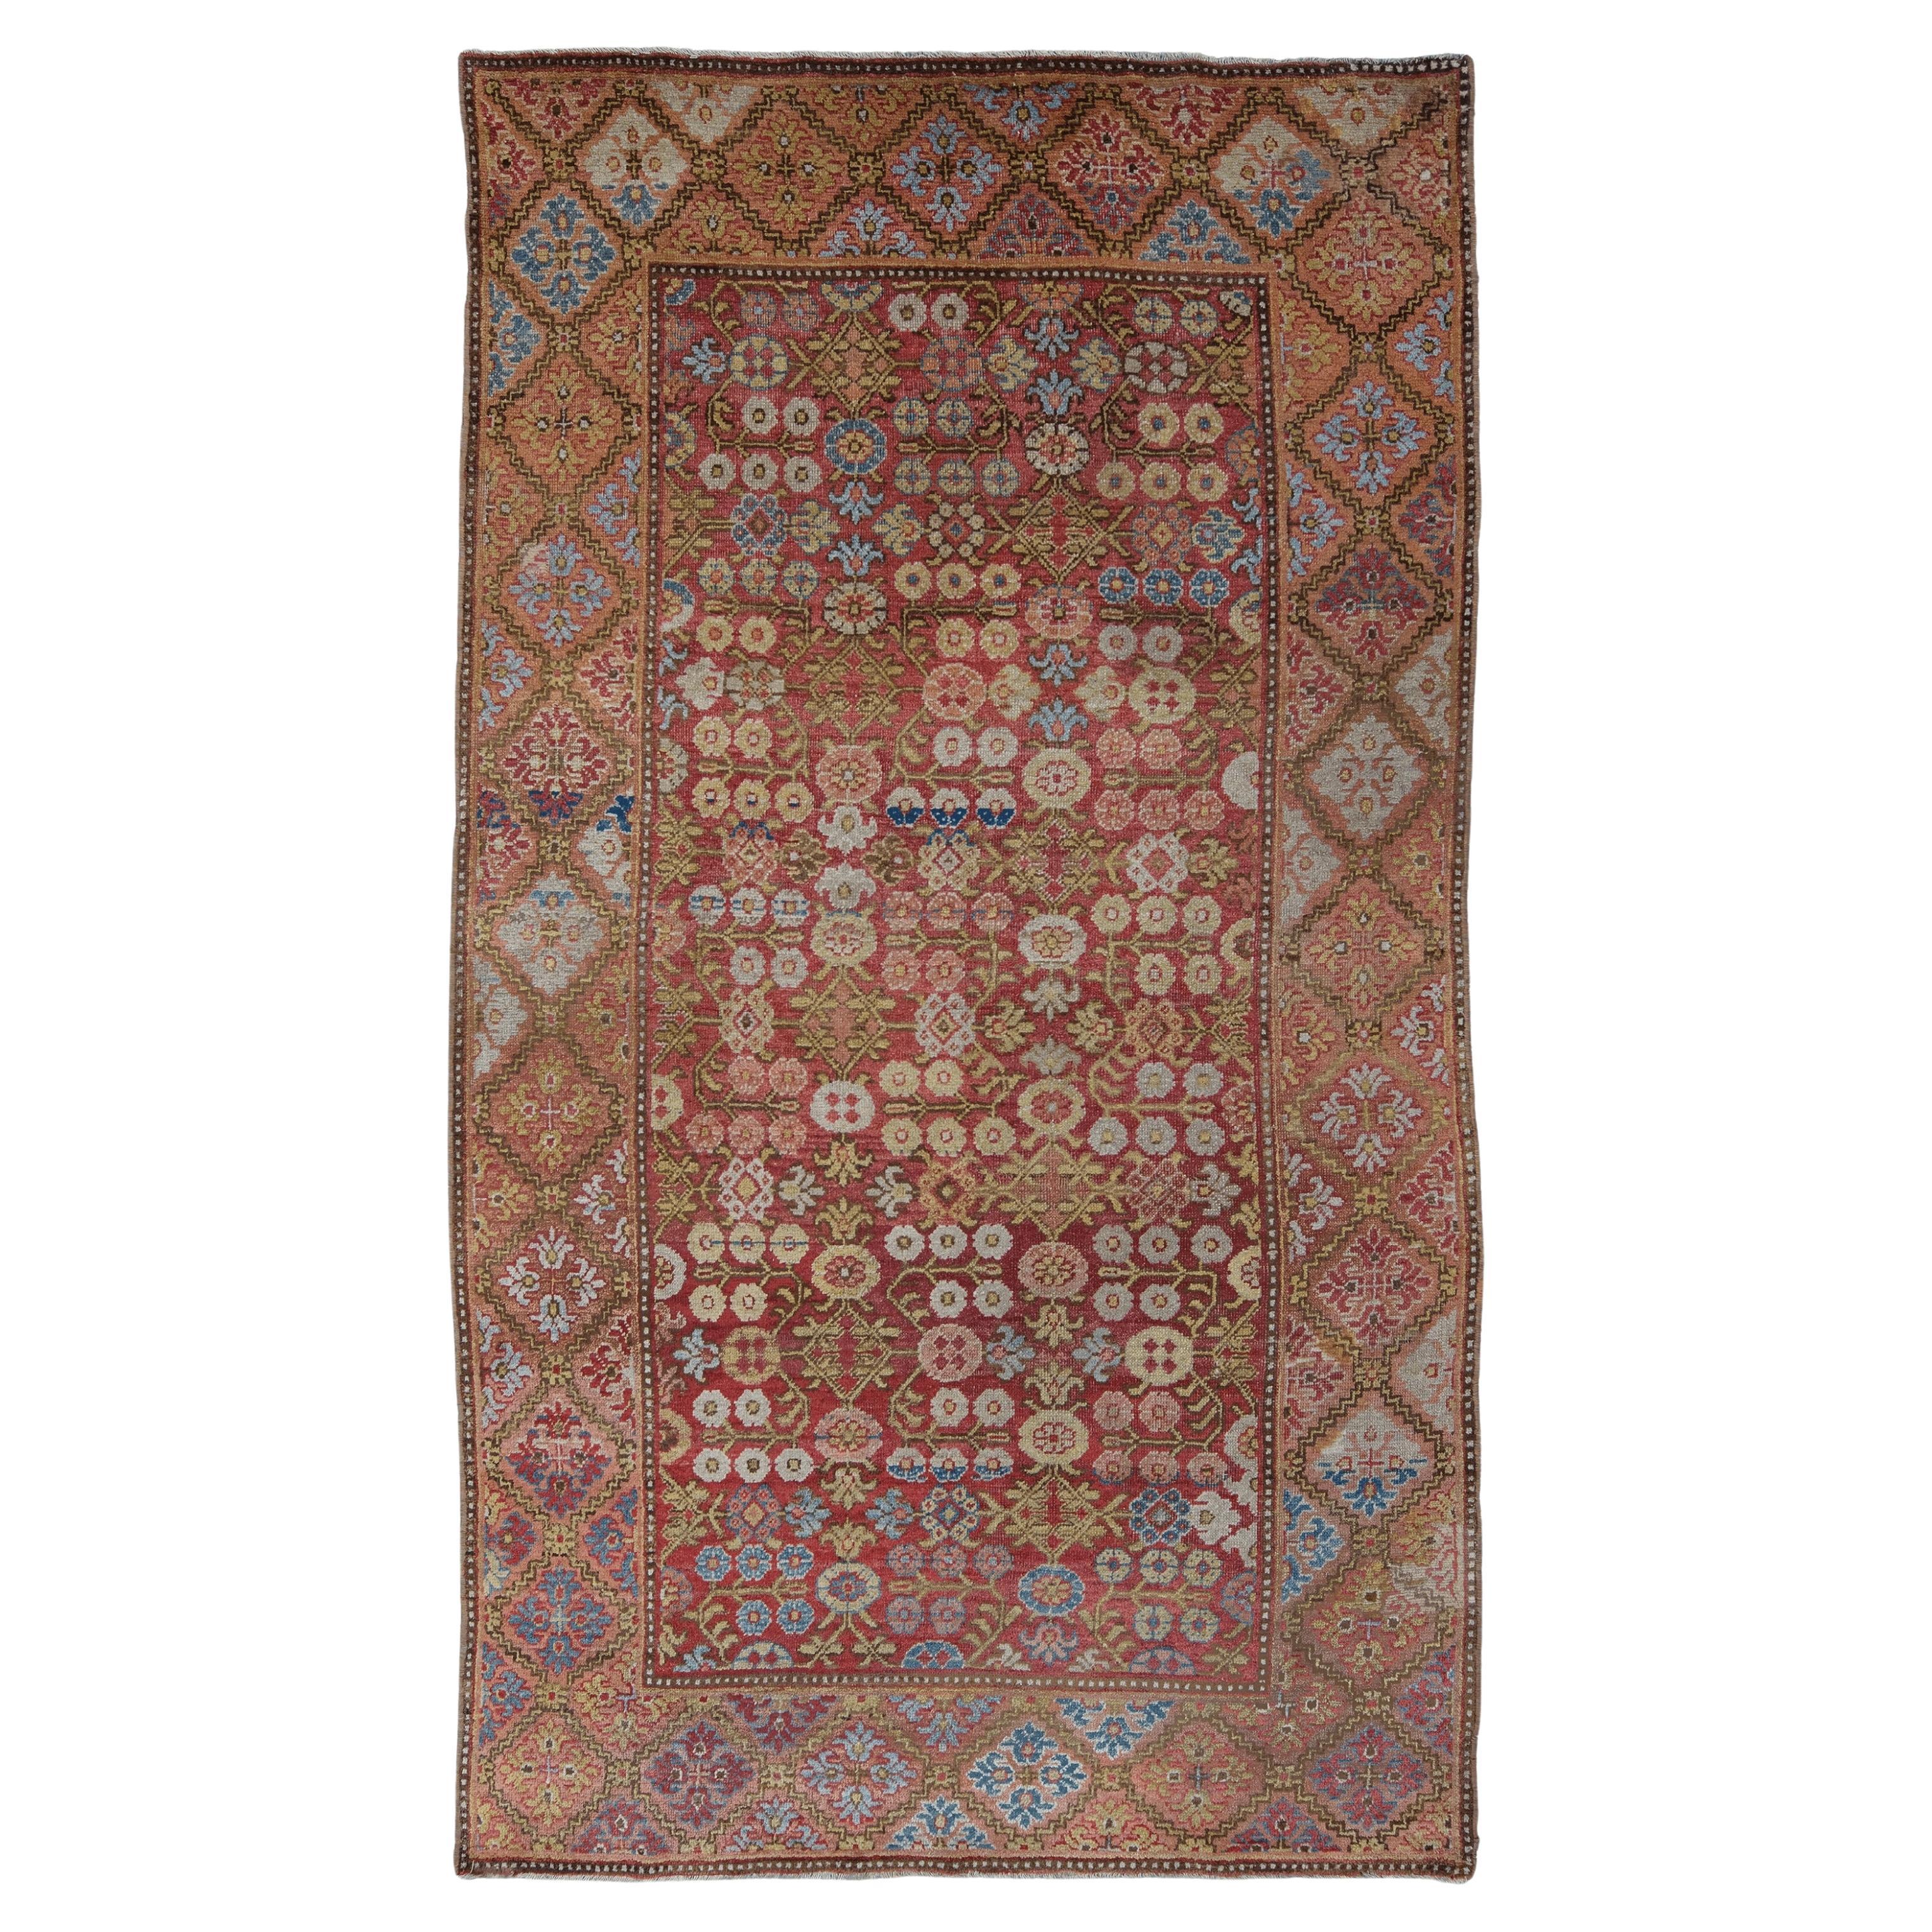 Antiker Khotan-Teppich - Khotan-Teppich aus dem 19. Jahrhundert, antiker asiatischer Teppich, antiker Teppich